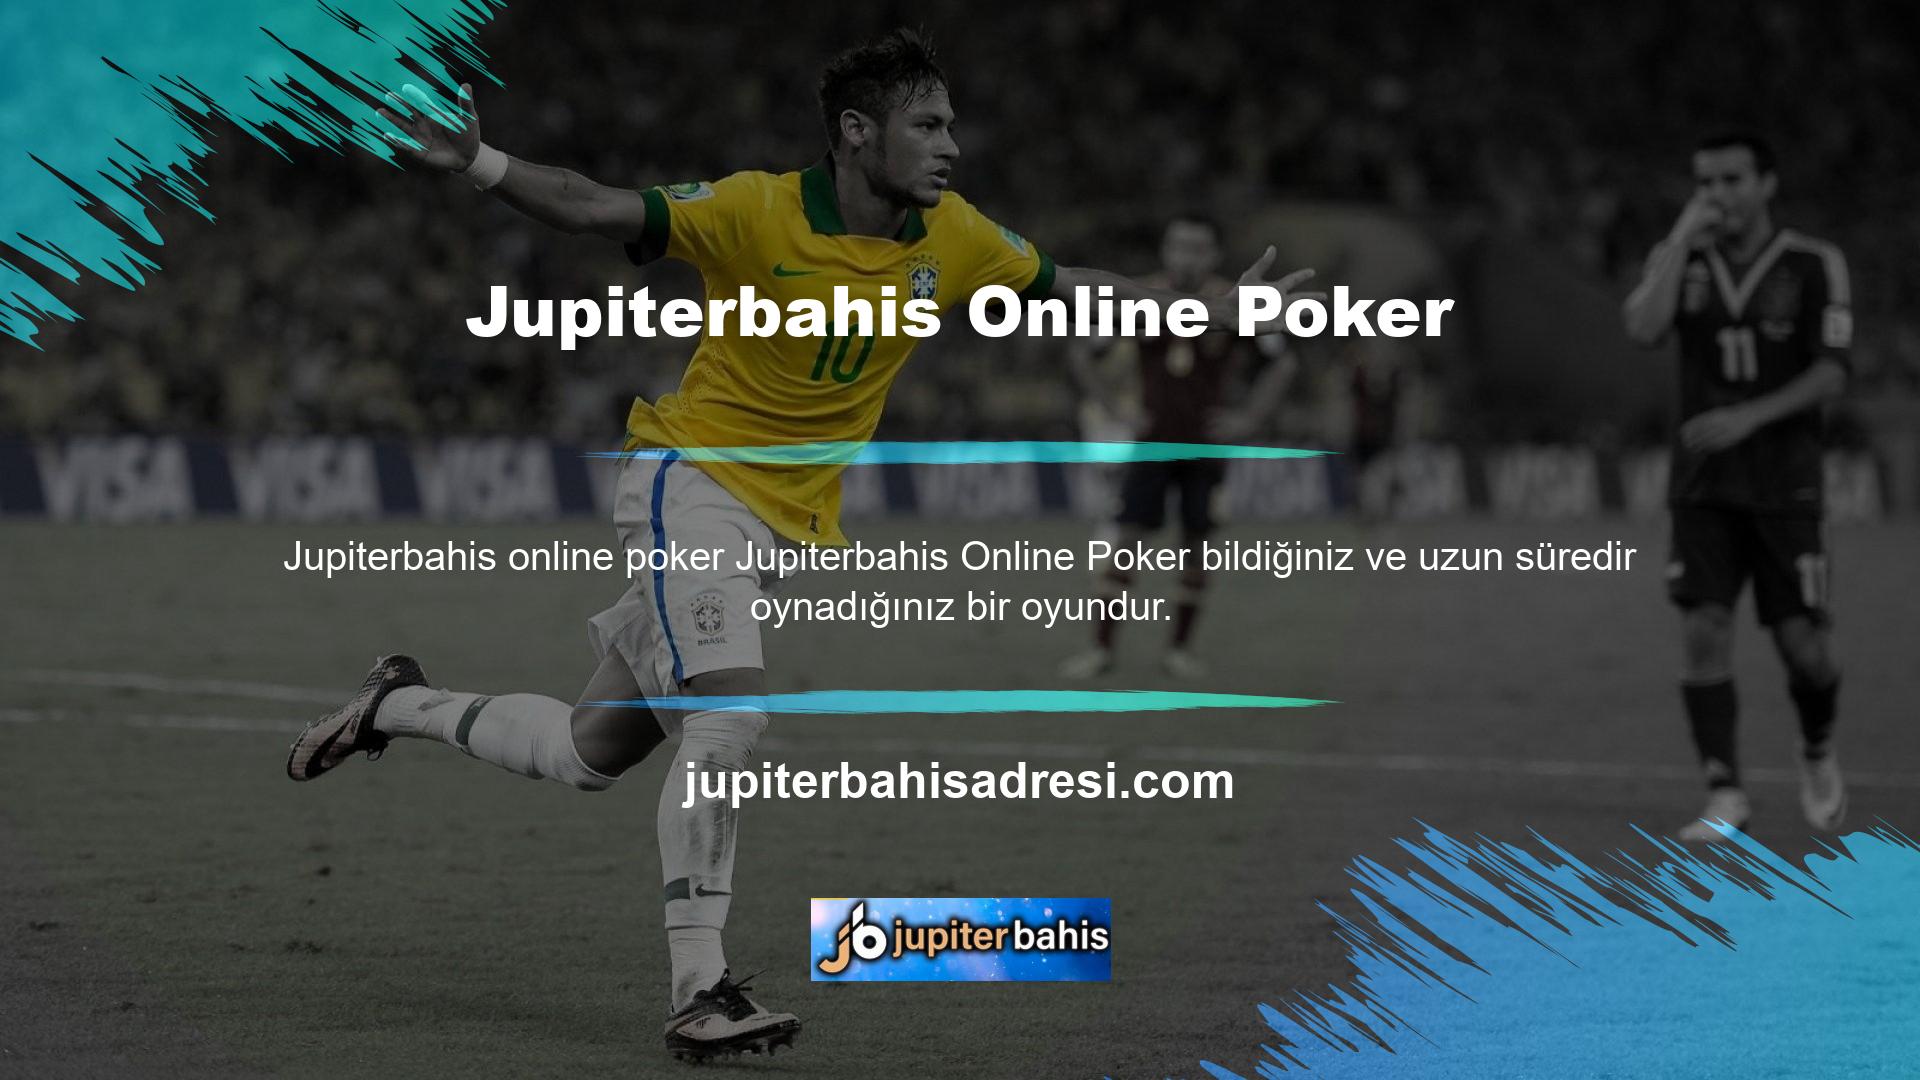 Jupiterbahis online poker